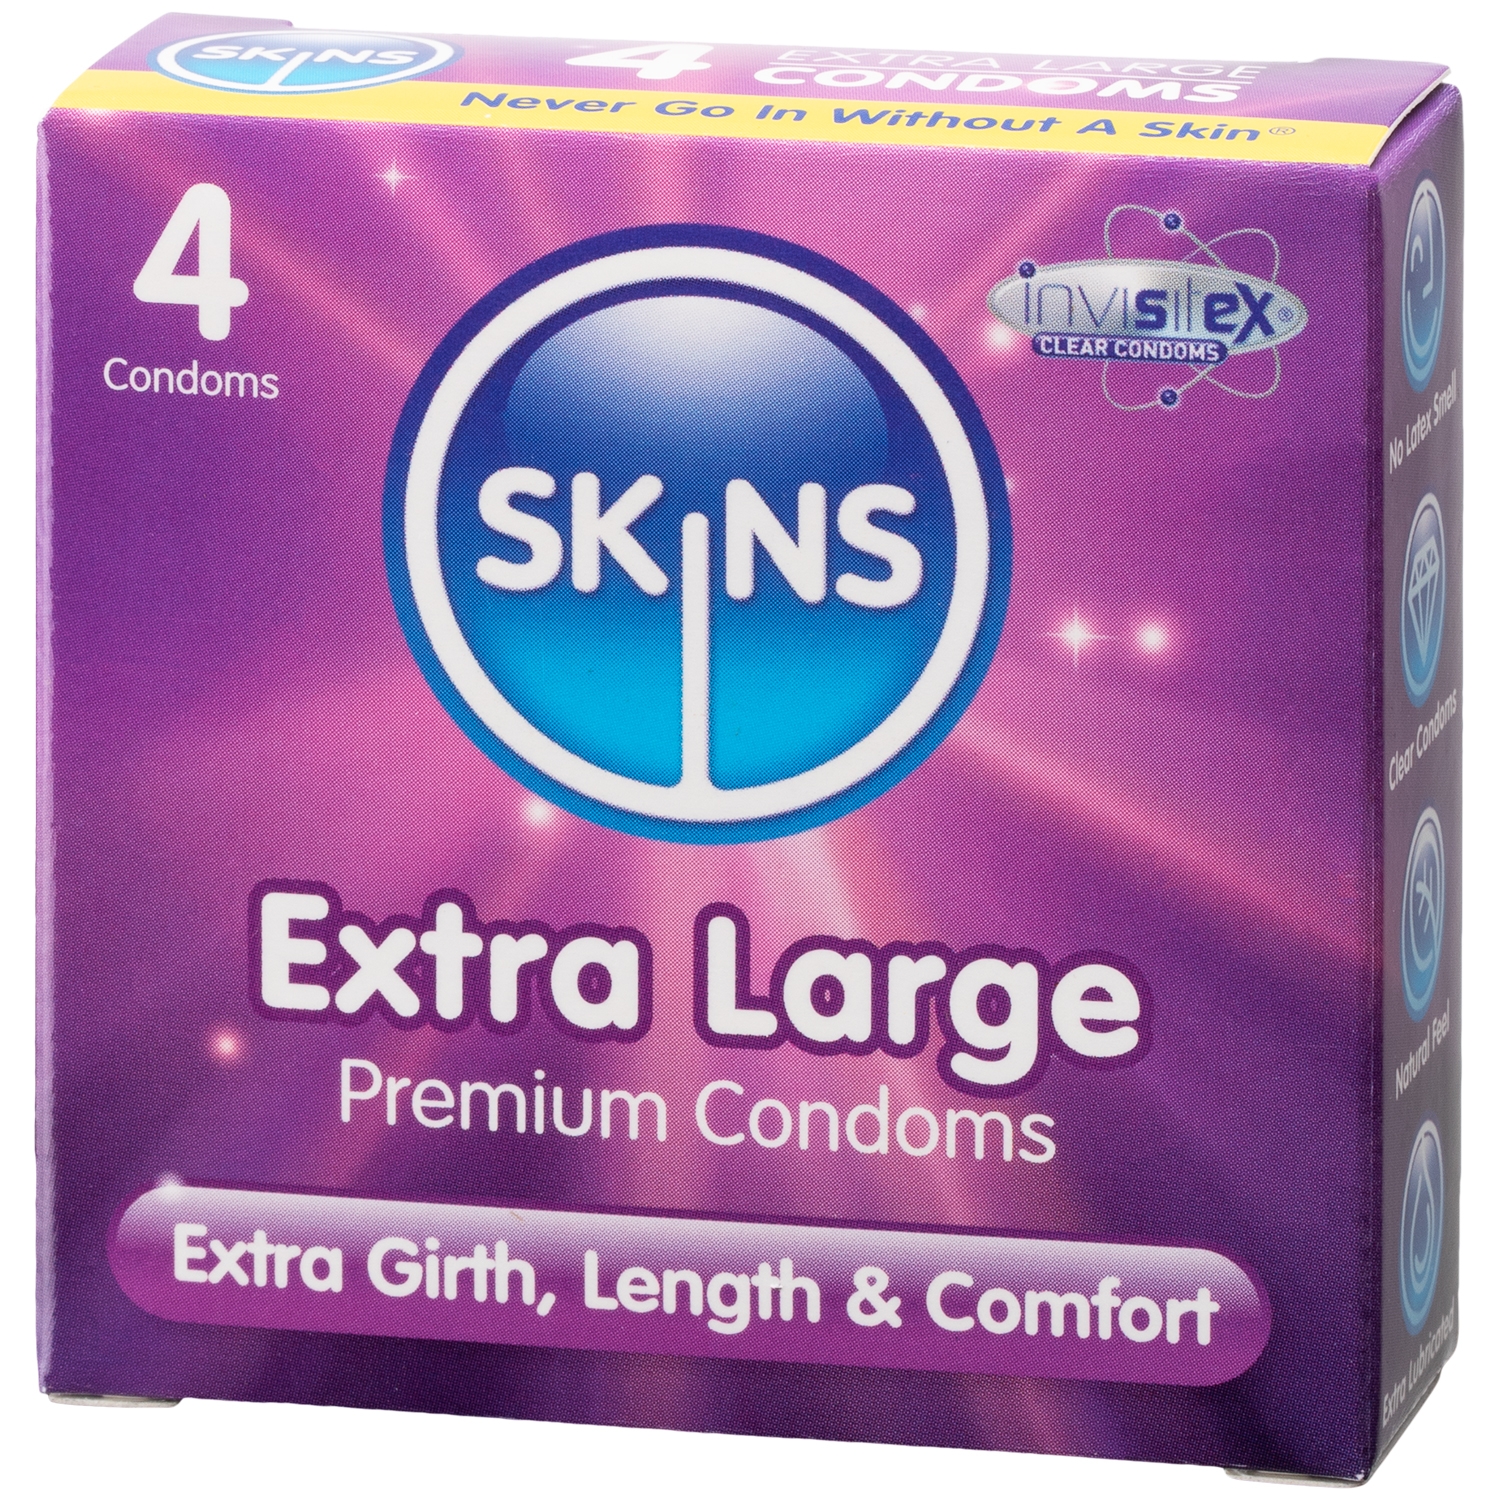 Skins Extra Large Kondomer 4 stk     - Clear